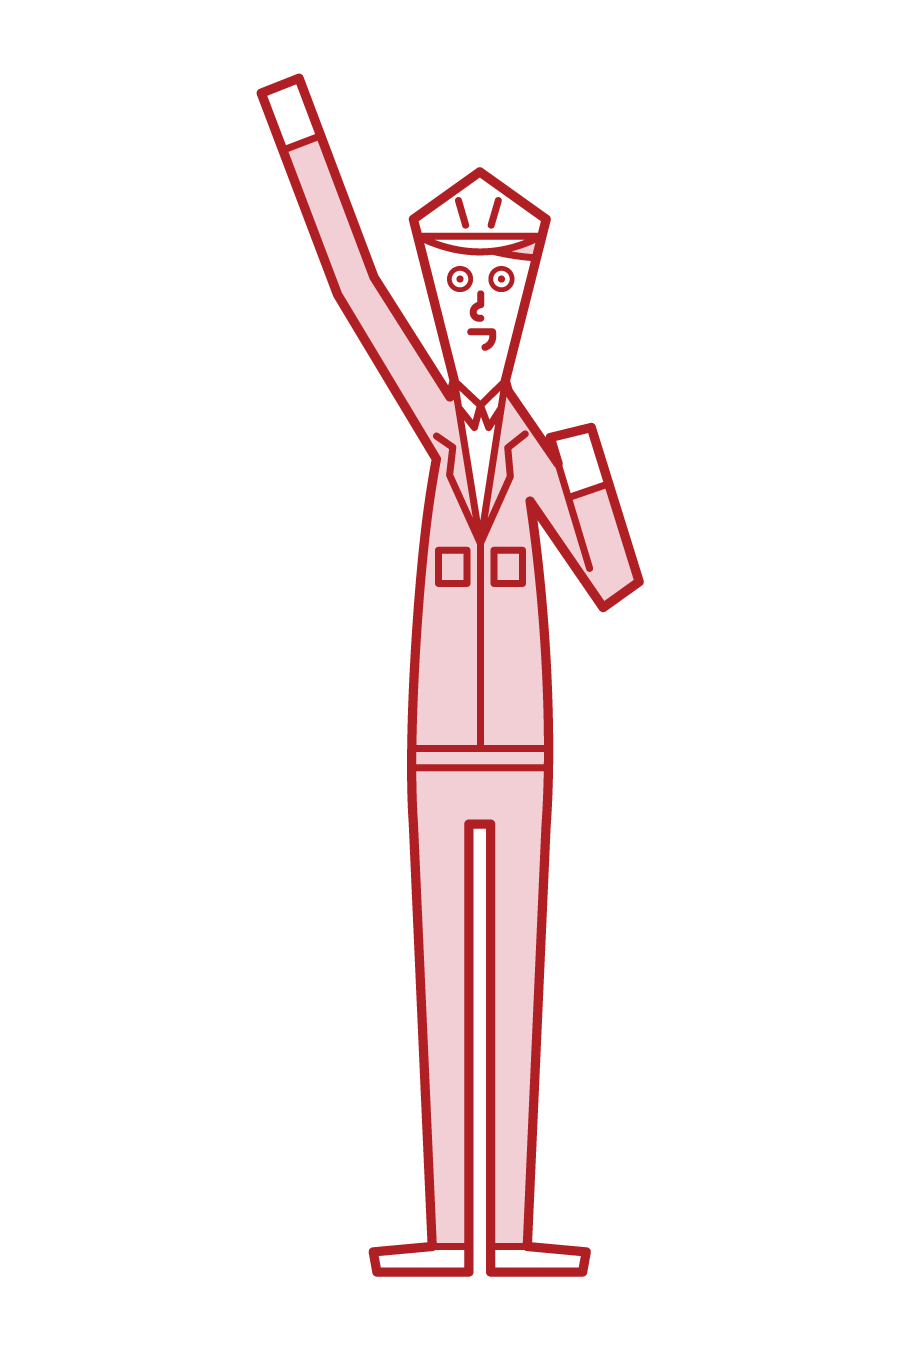 Illustration of Aei-oh (man), a field supervisor who raises his fist high